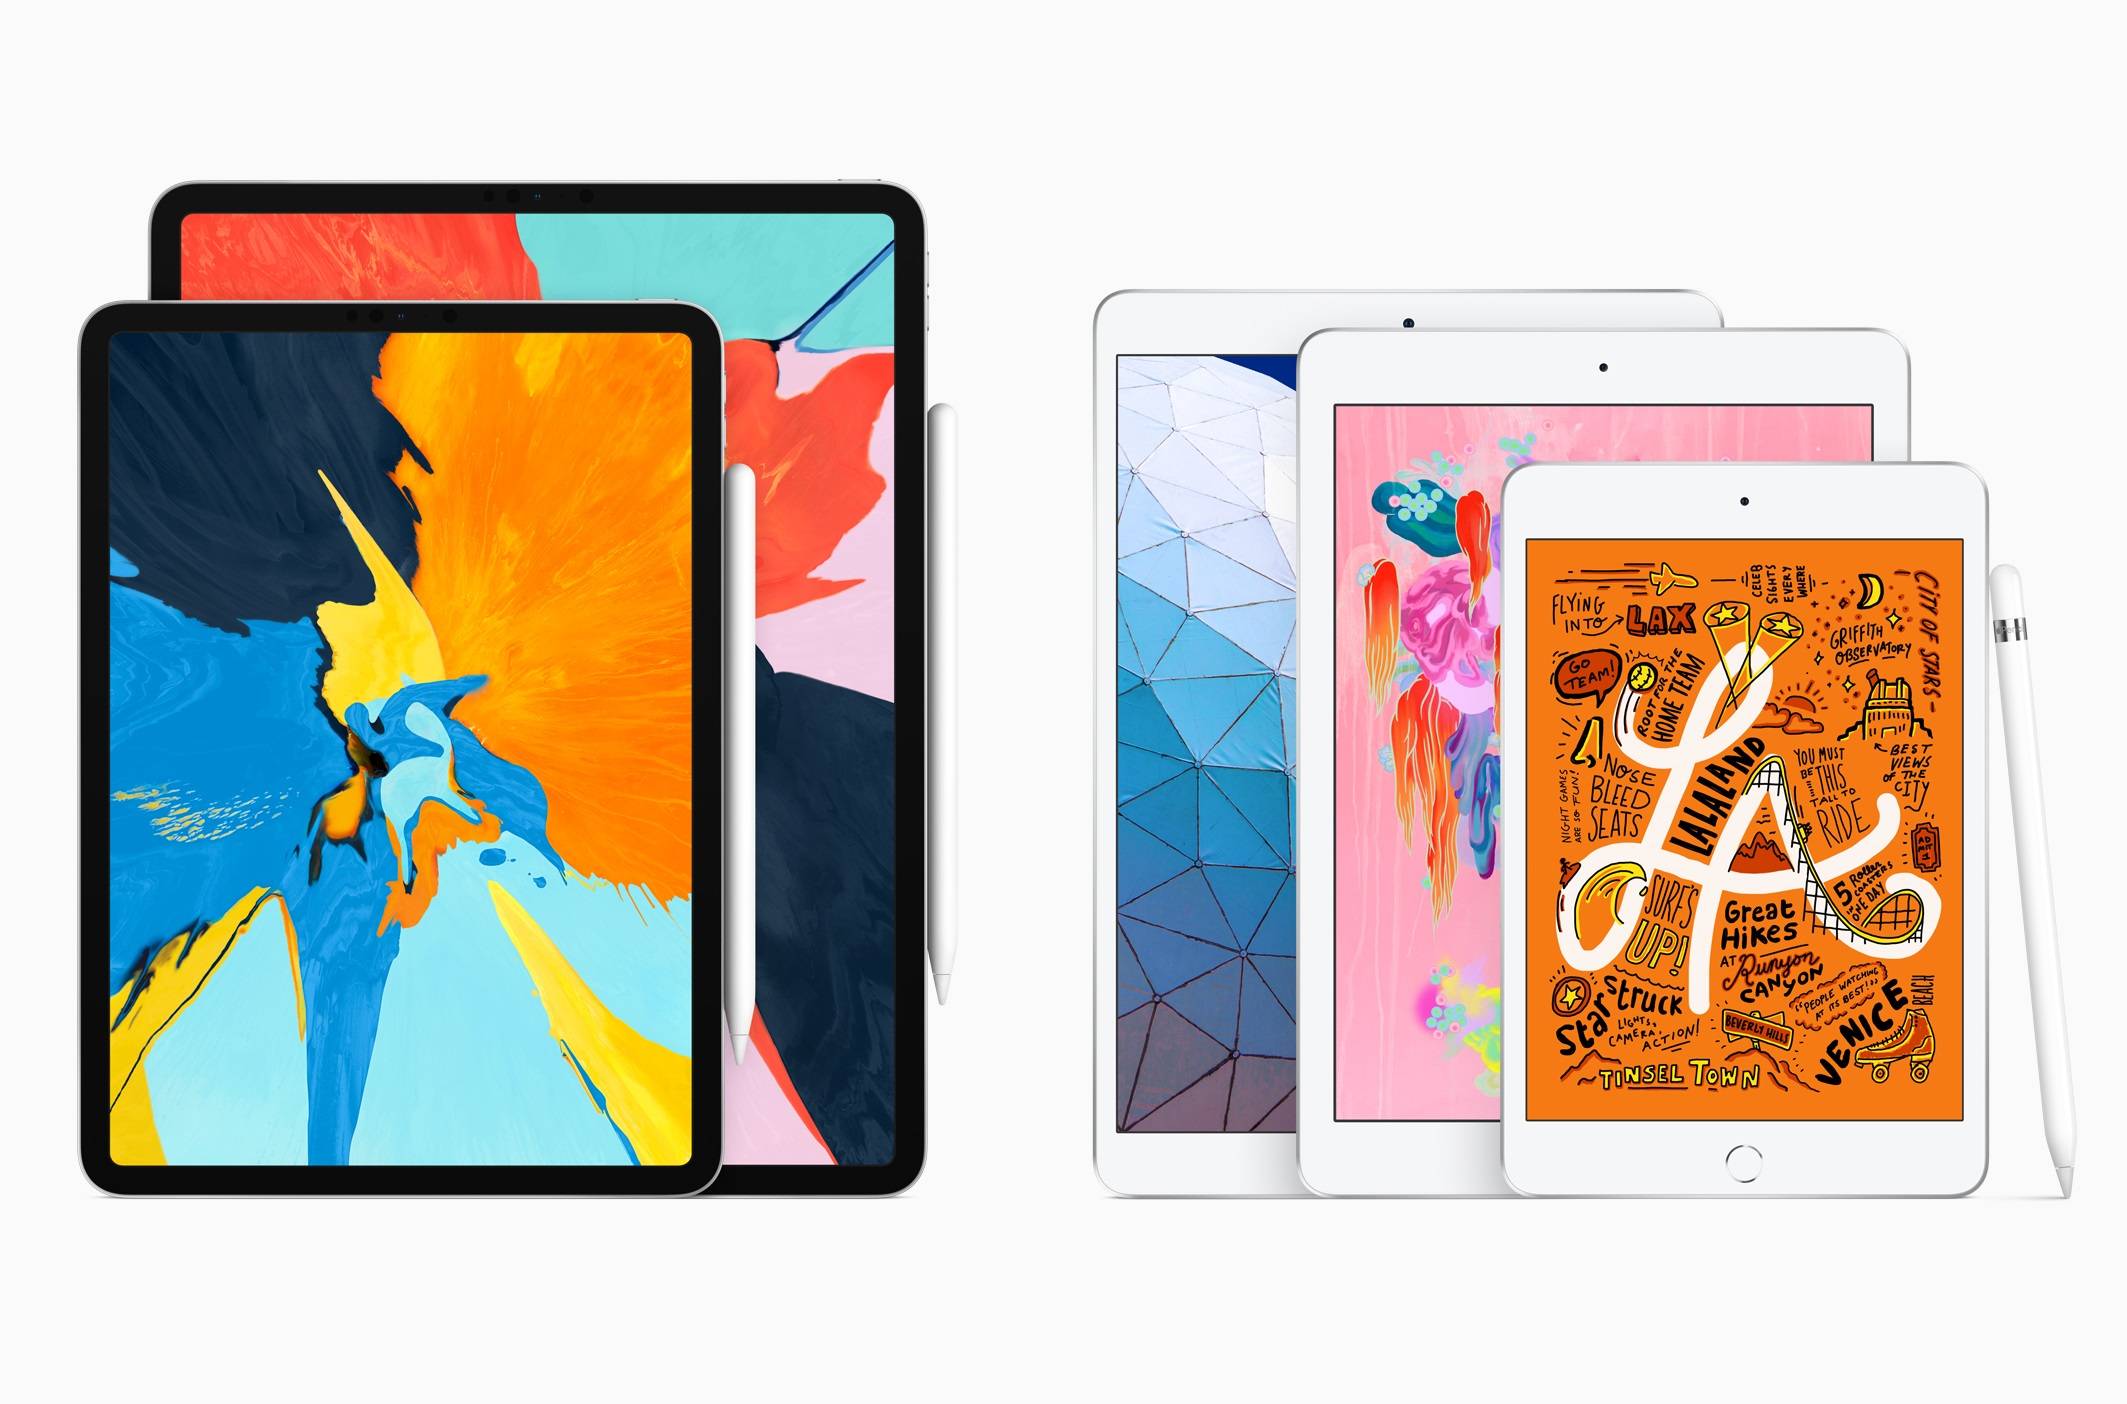 Apple iPad Air and iPad Mini